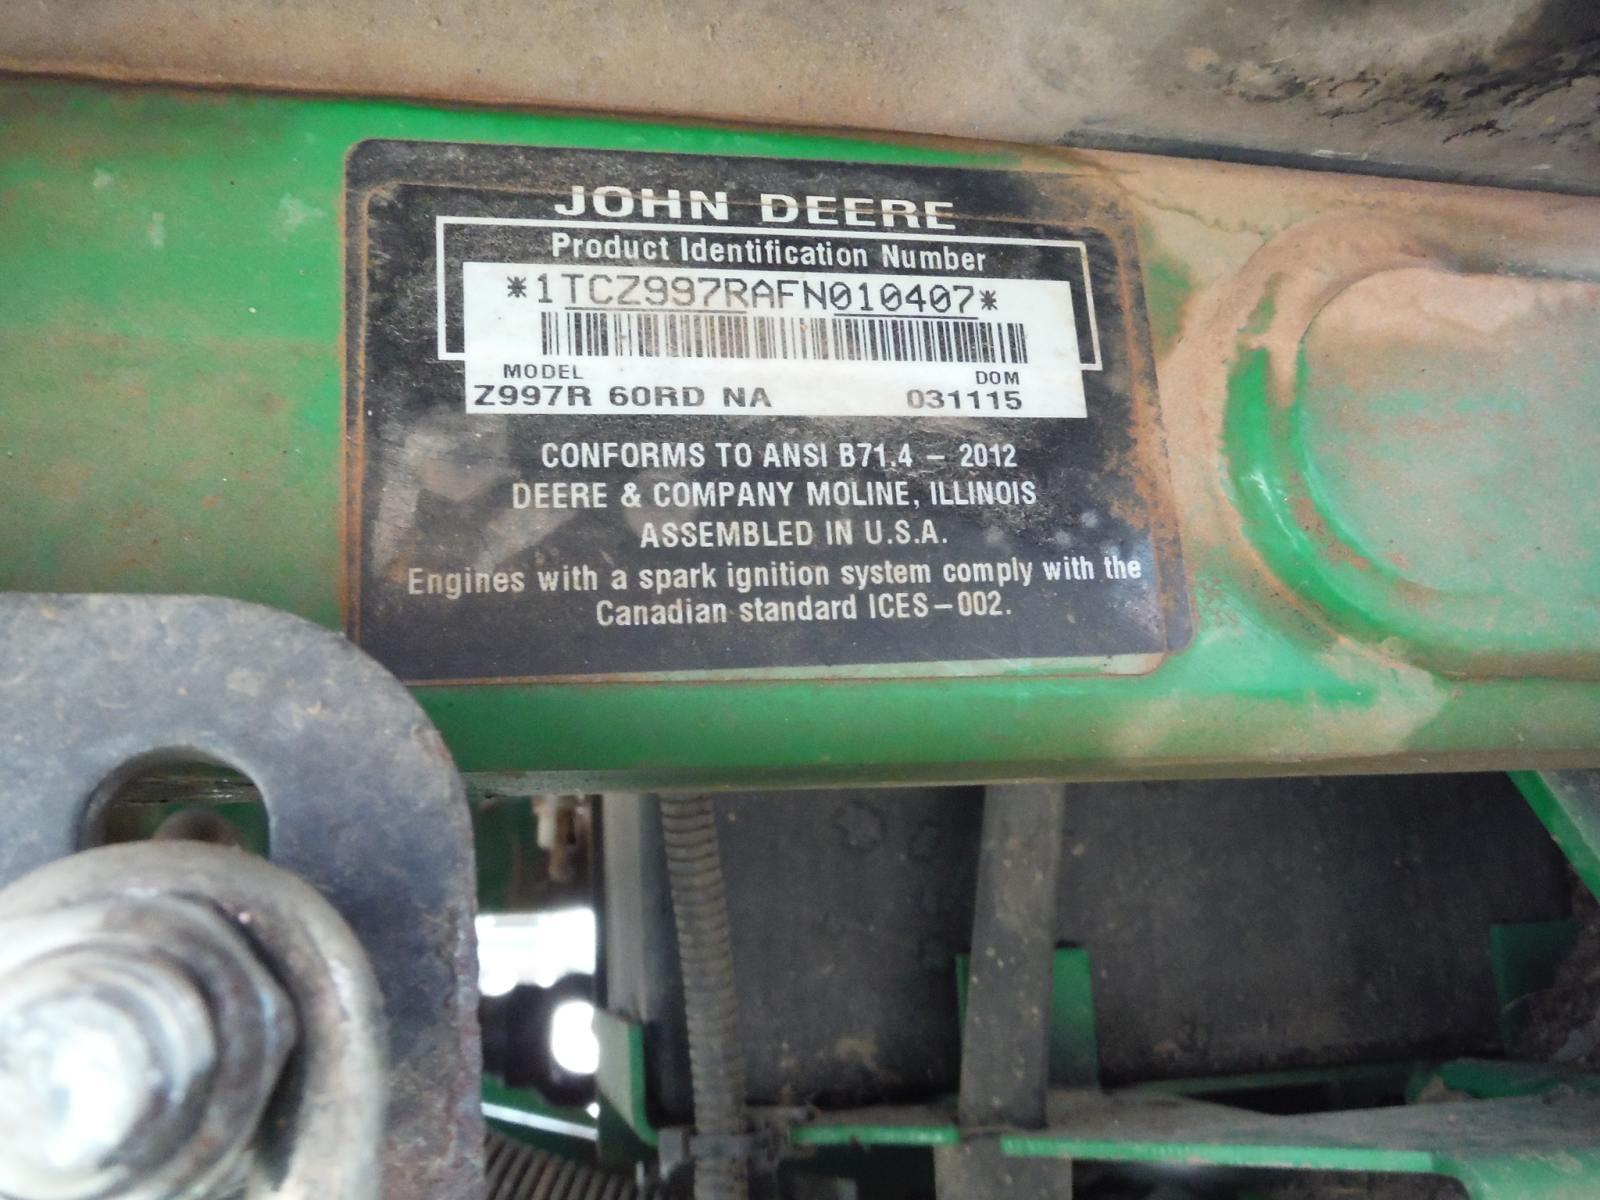 John Deere Z997R Zero-turn Mower, s/n 1TCZ997RAFN010407: (Owned by Alabama